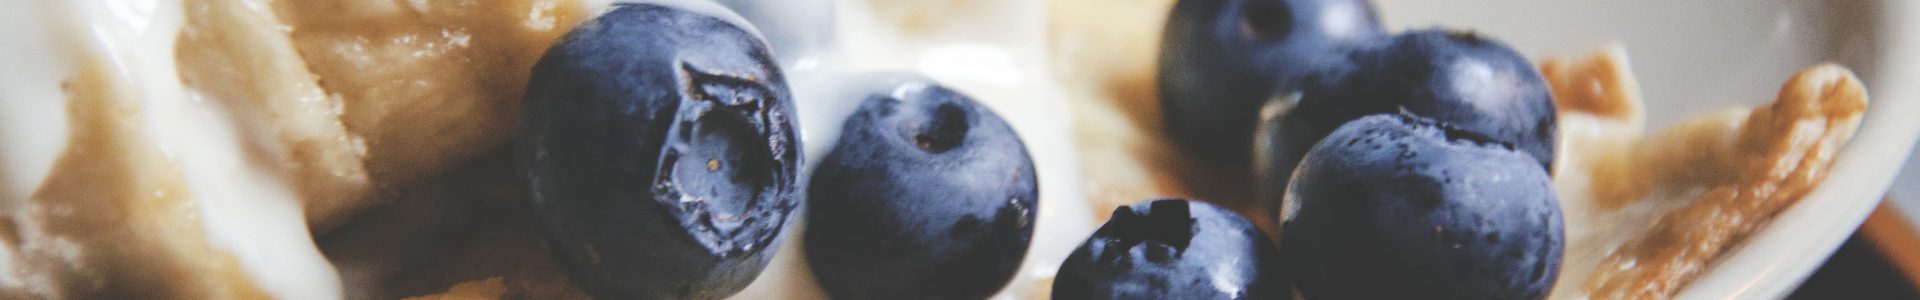 blueberries-919029